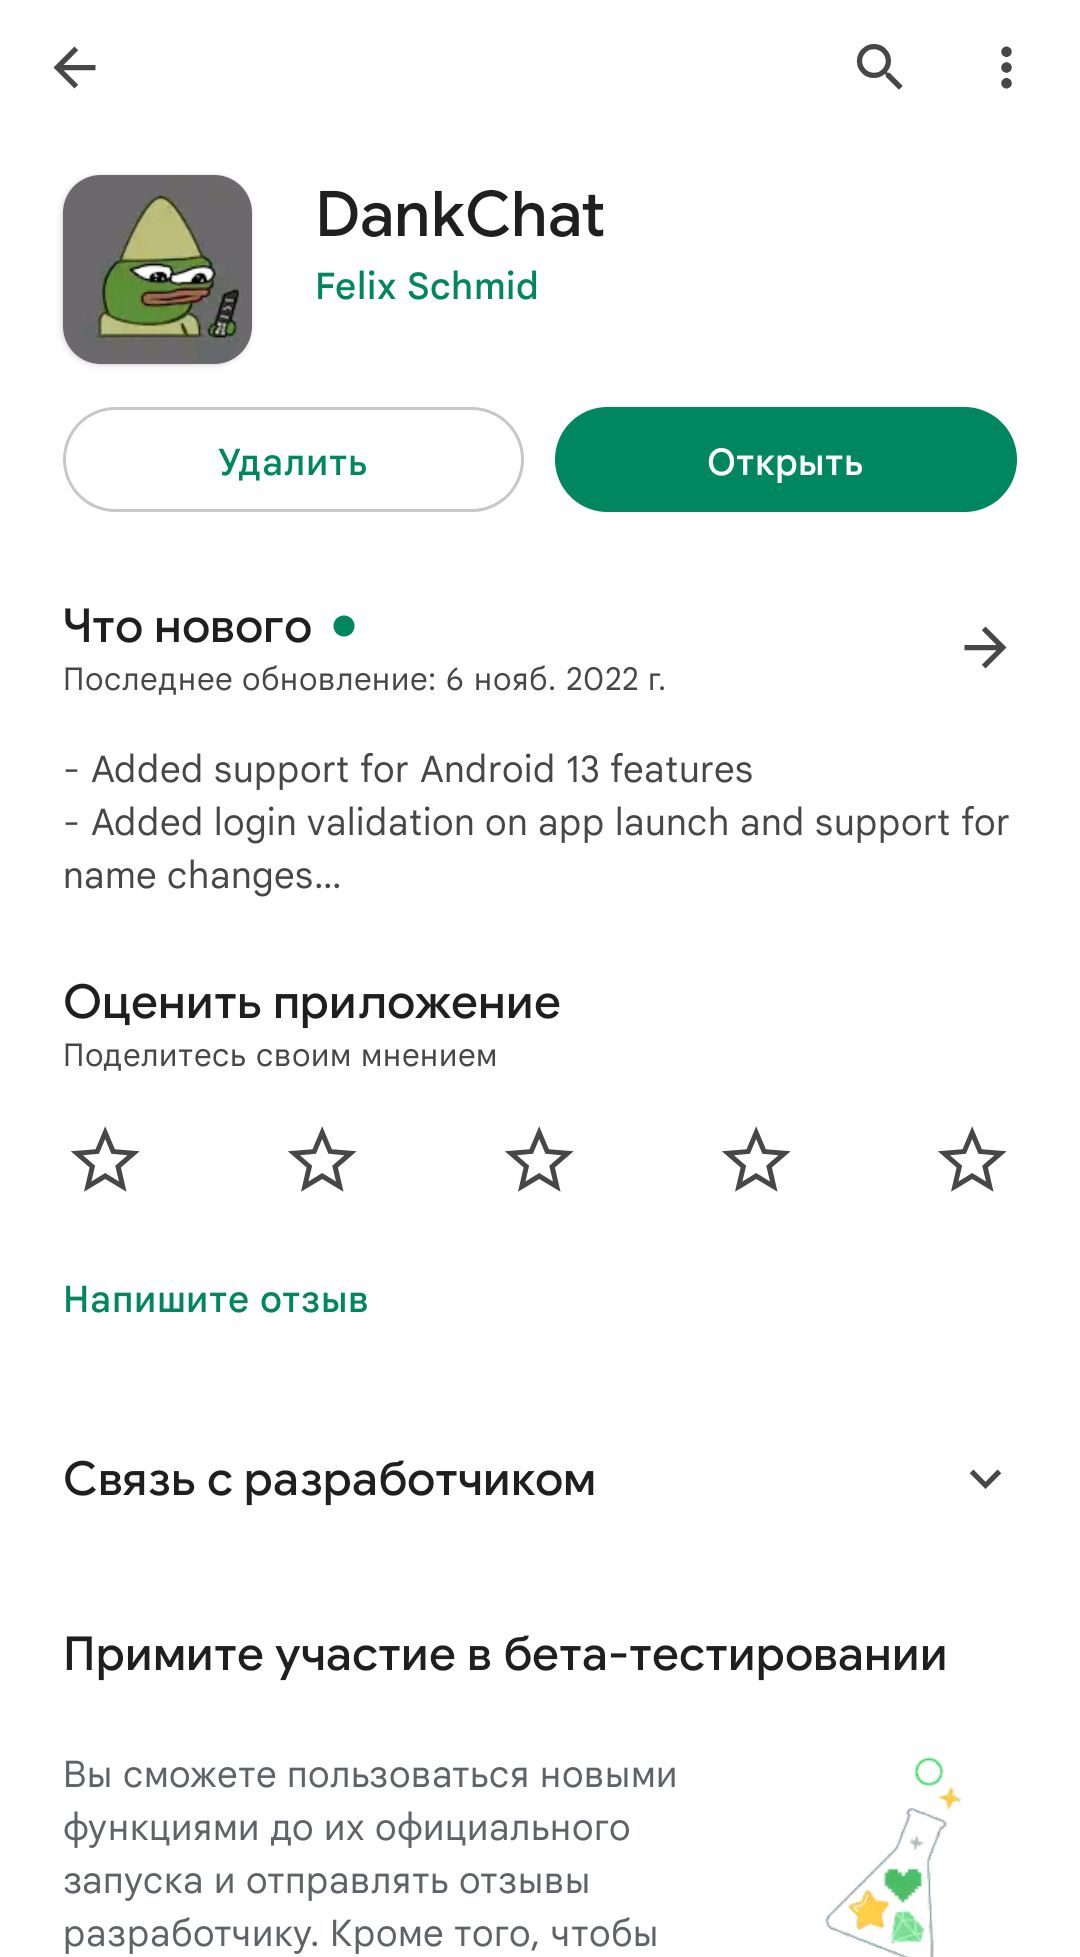 Инструкция по установке DankChat на Android